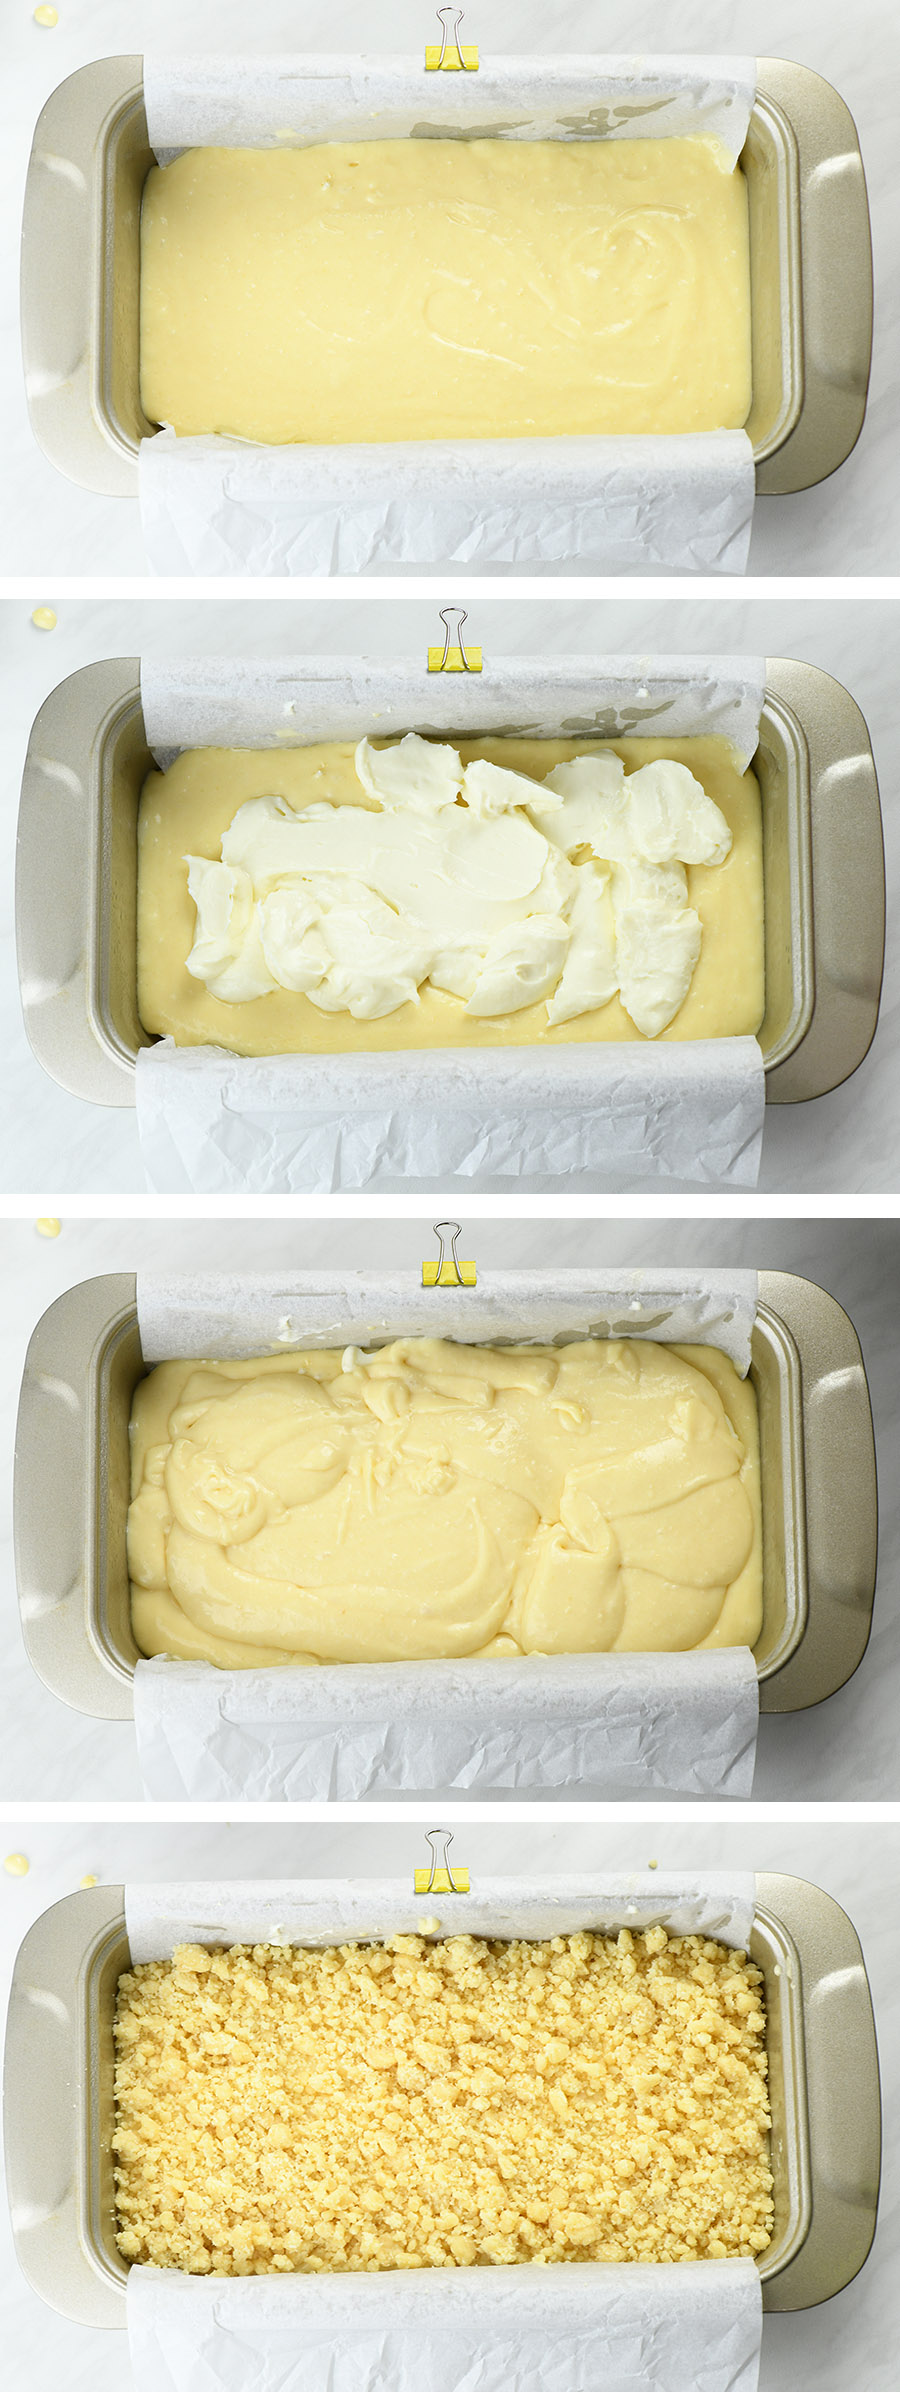 Four steps of preparing lemon pound cake.